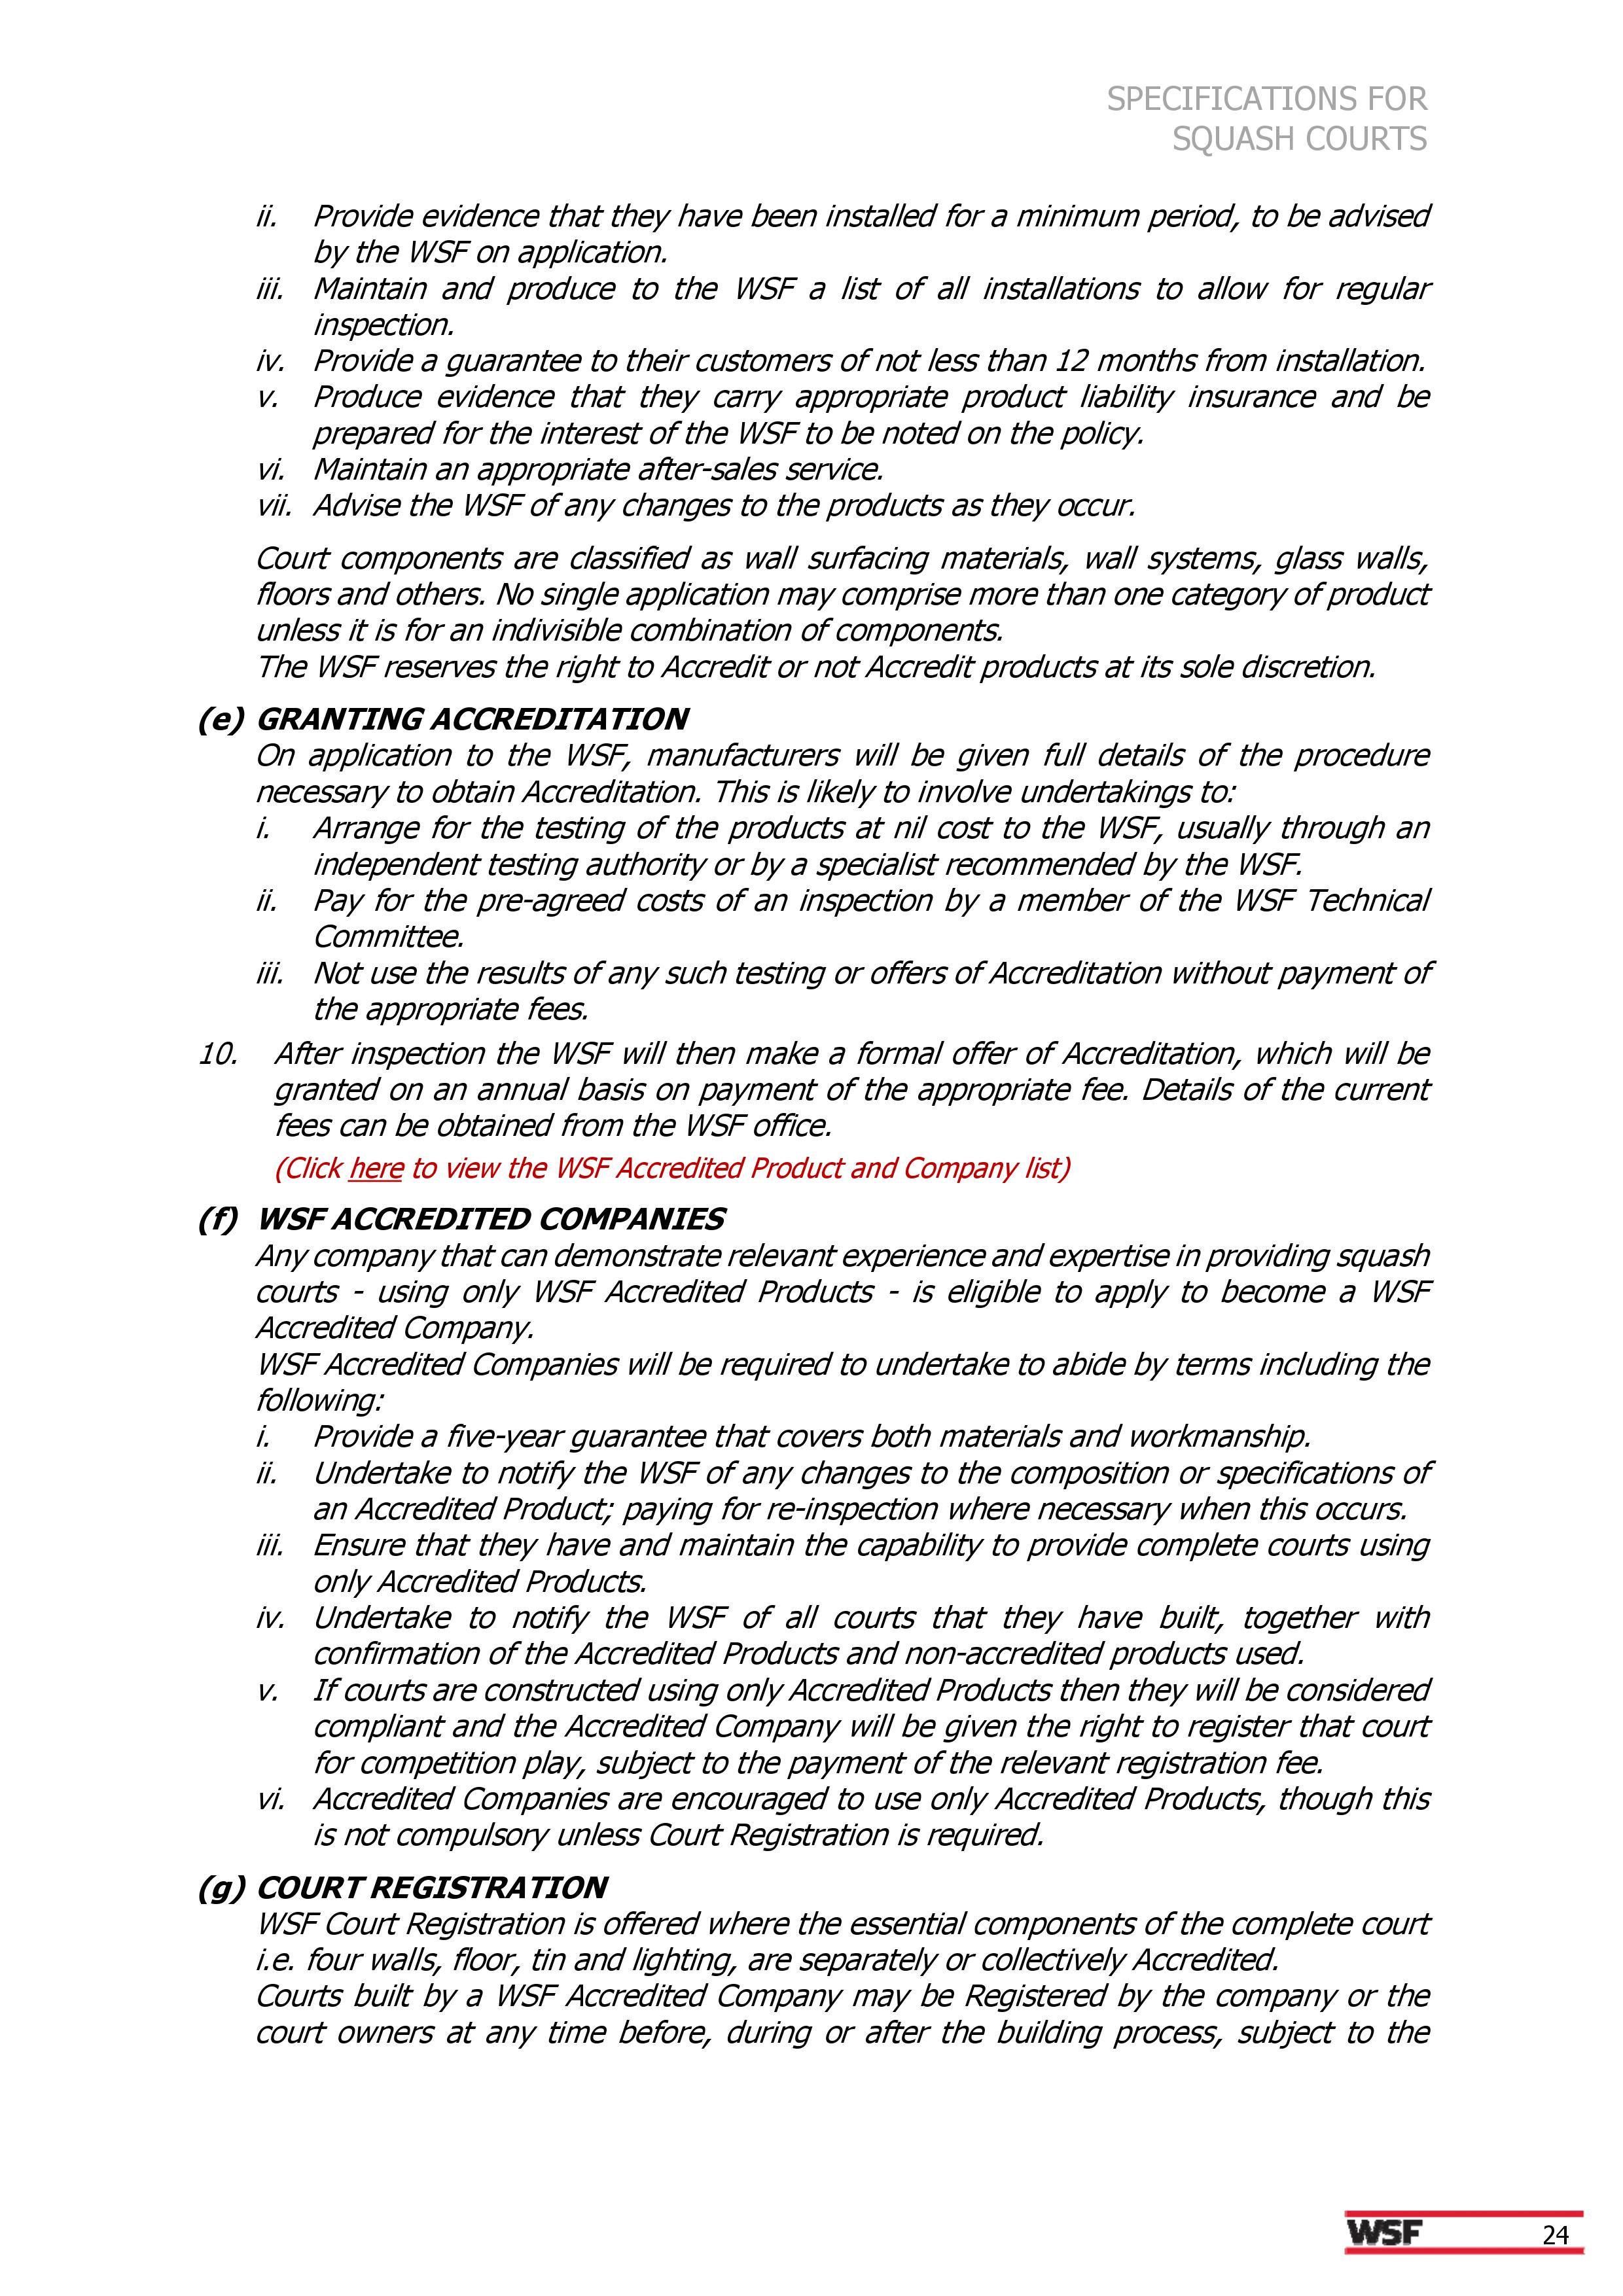 World Squash Federation Squash Court Specifications - Global Squash Coach - Page 27.jpg